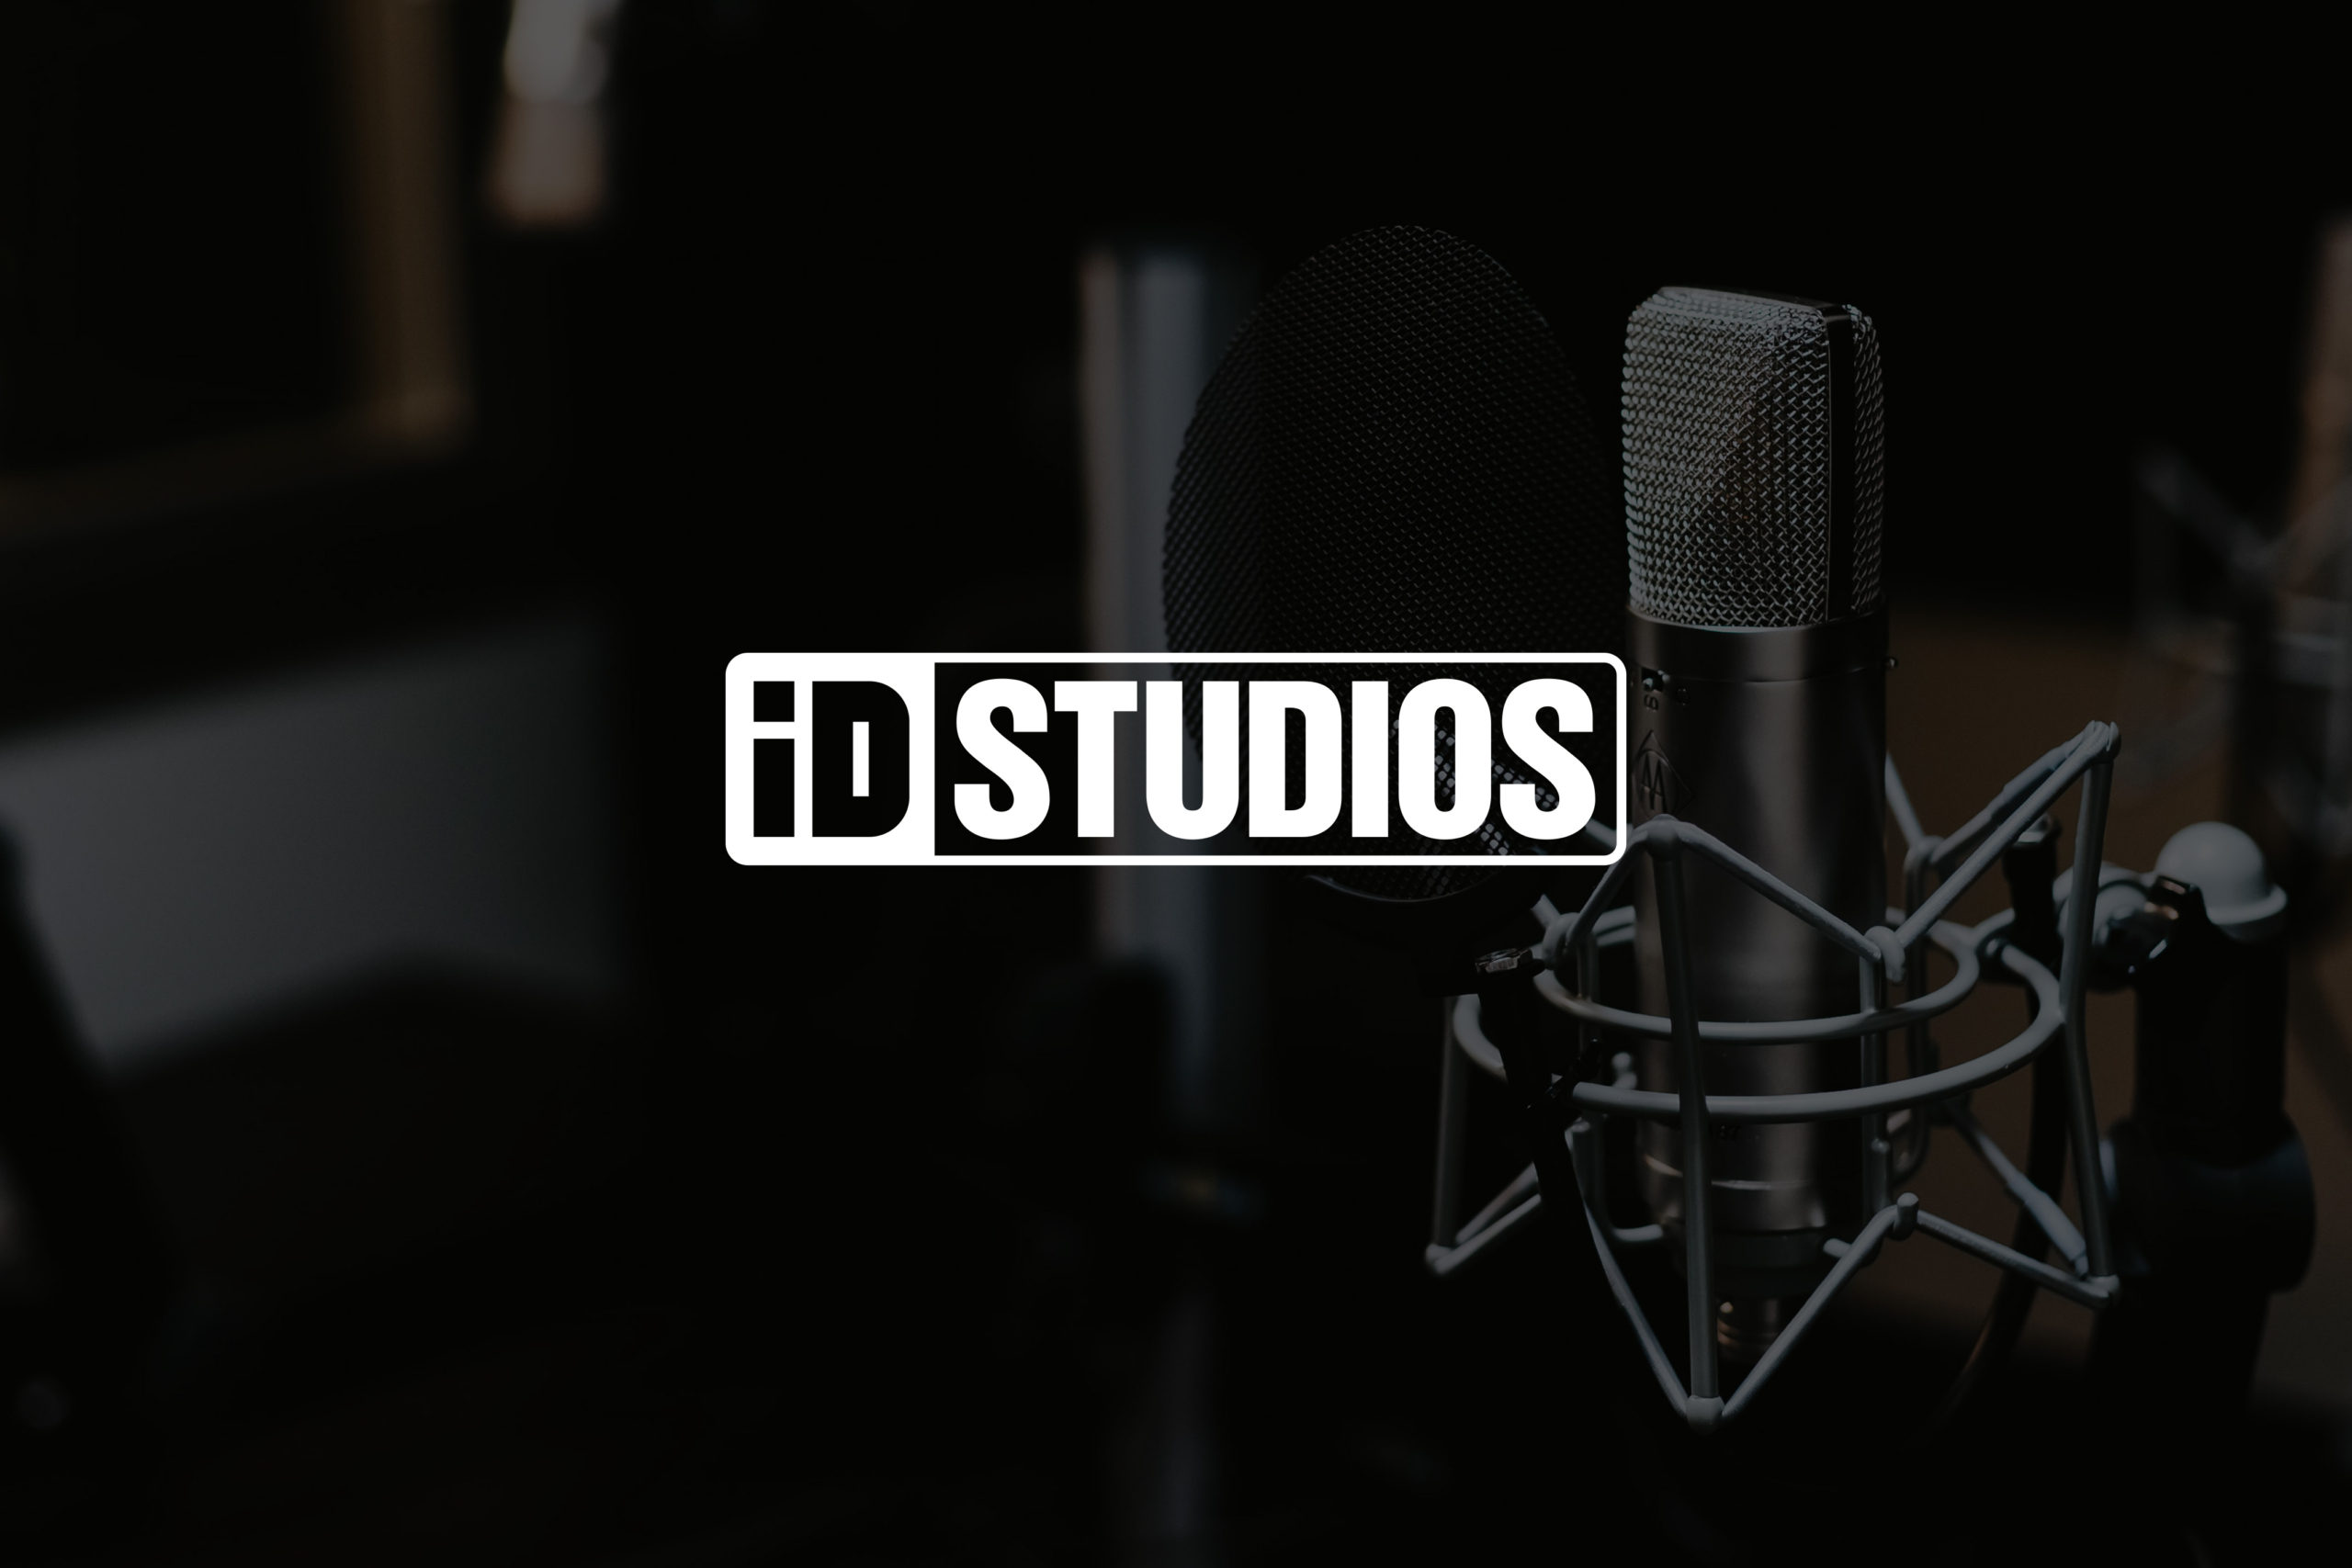 iD Studios logo on studio background